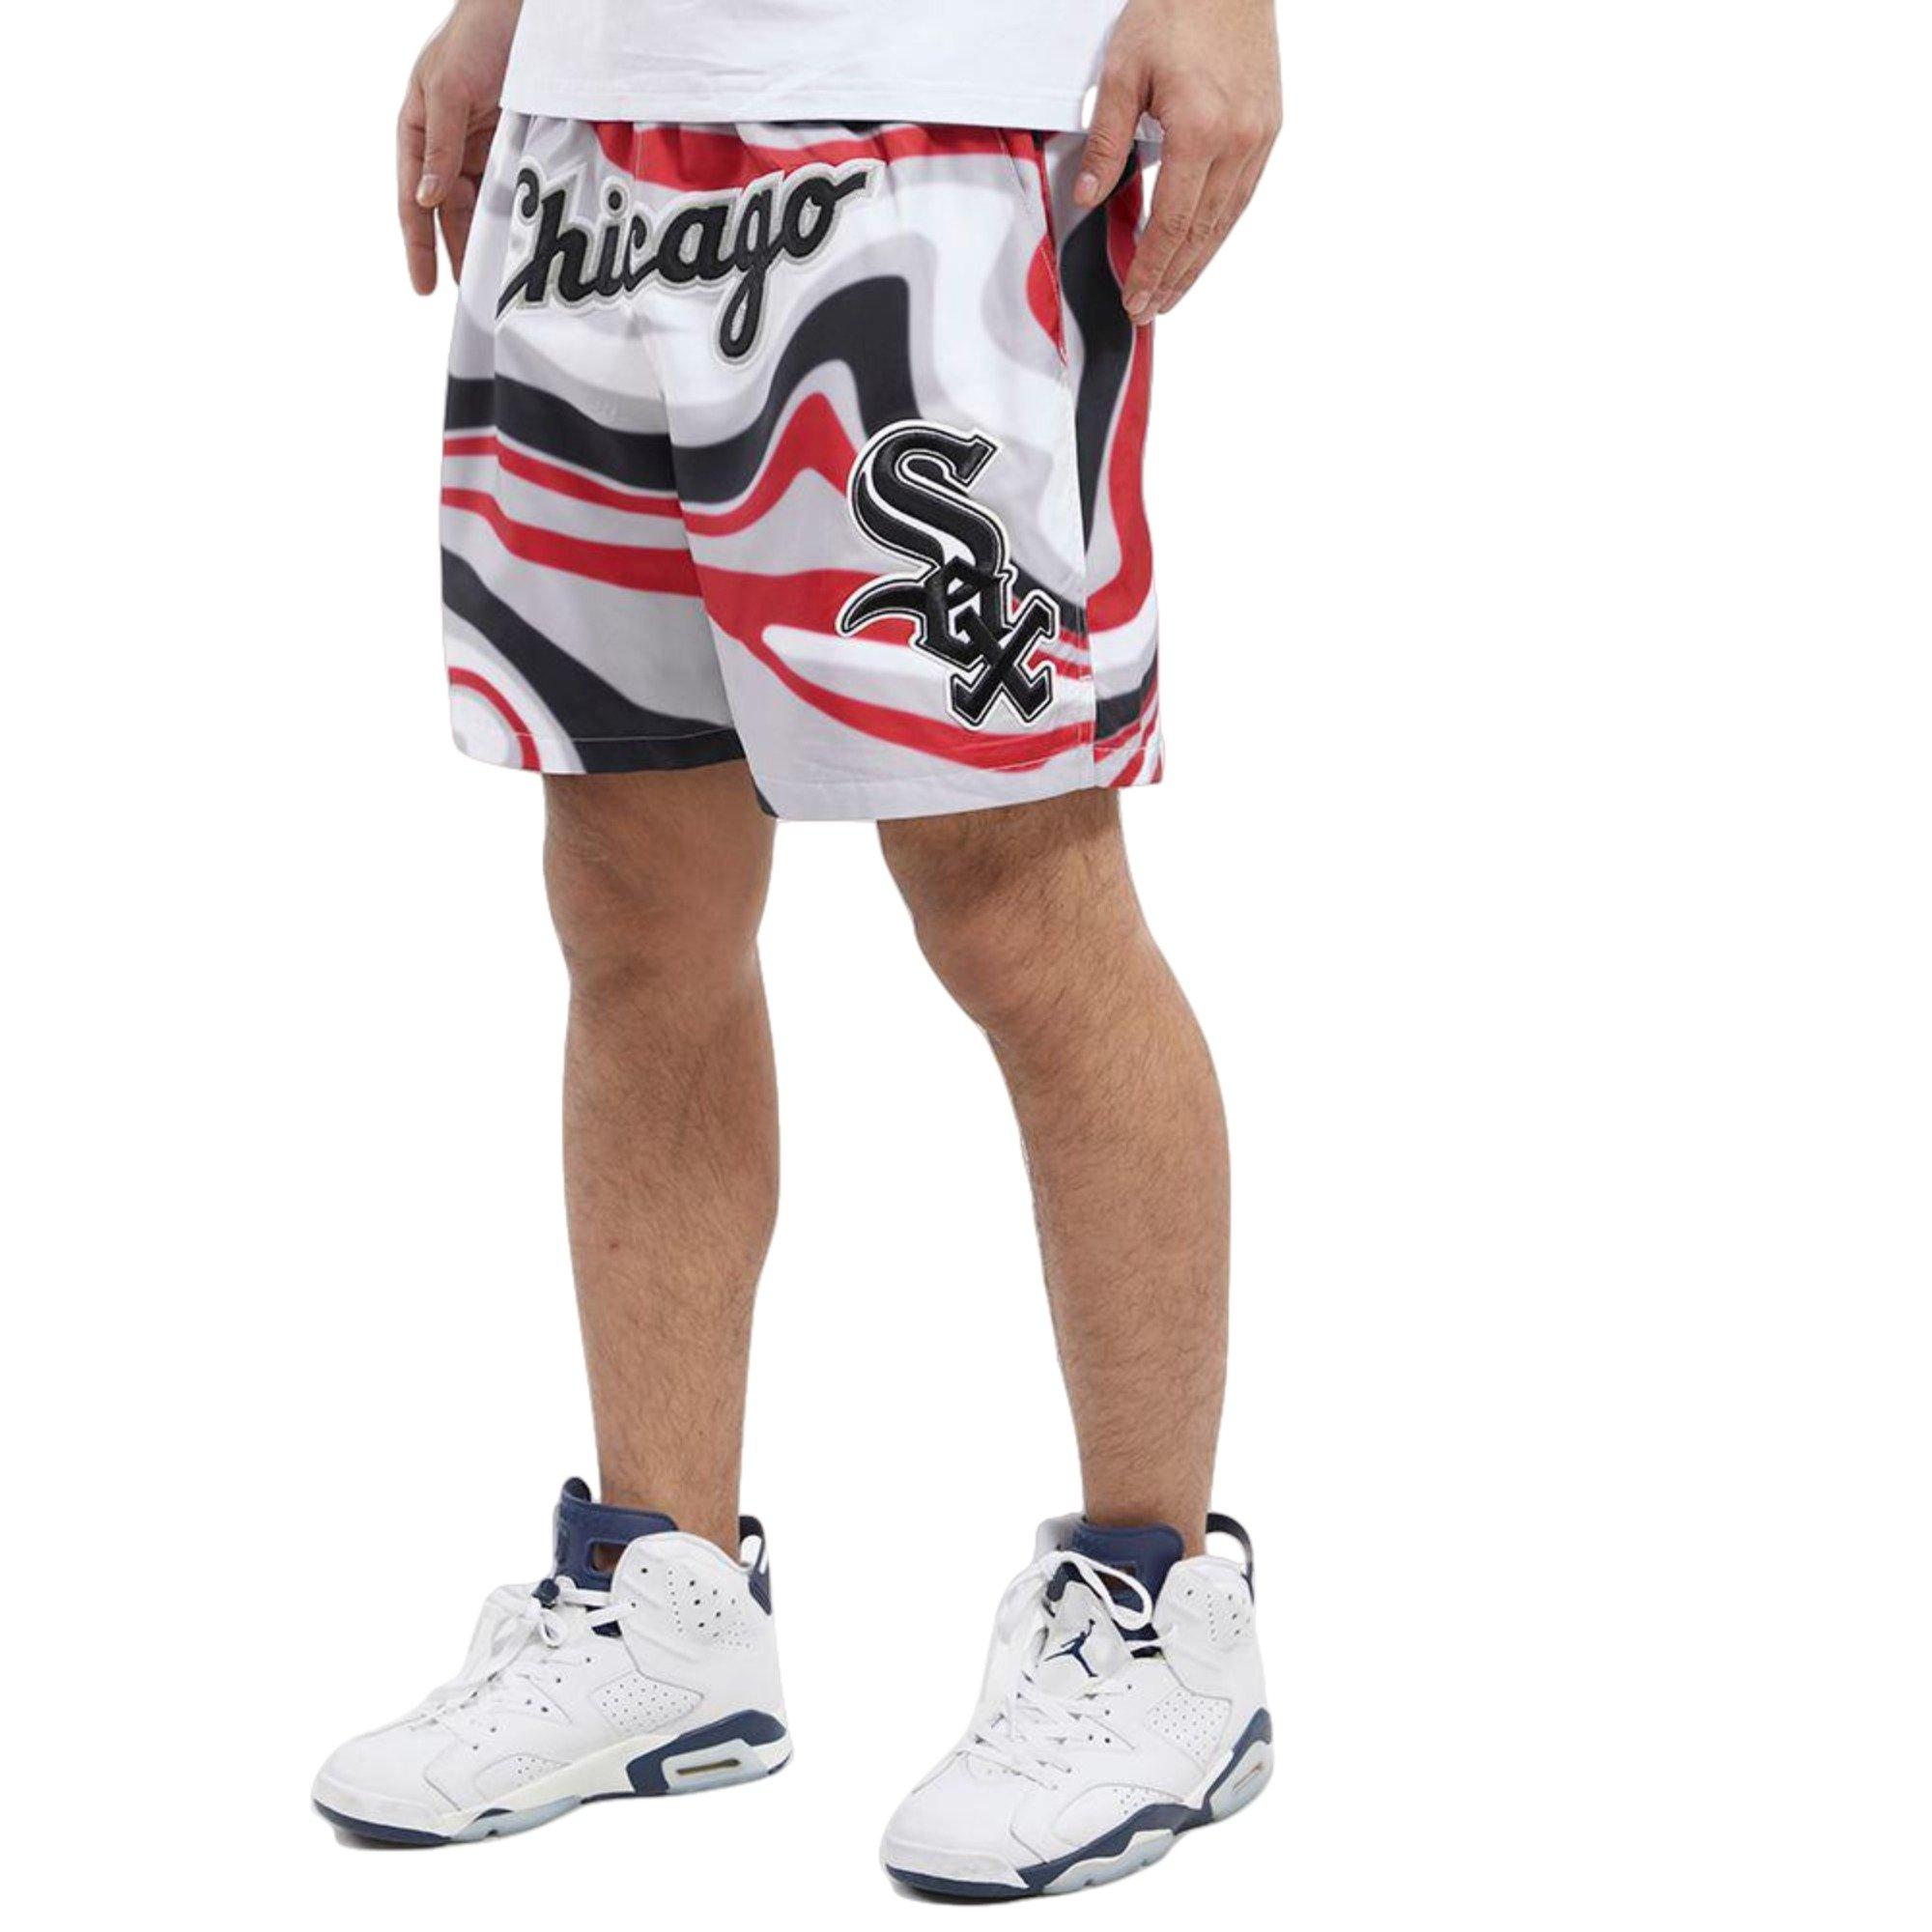 Shorts - Chicago Whitesox Throwback Apparel & Jerseys